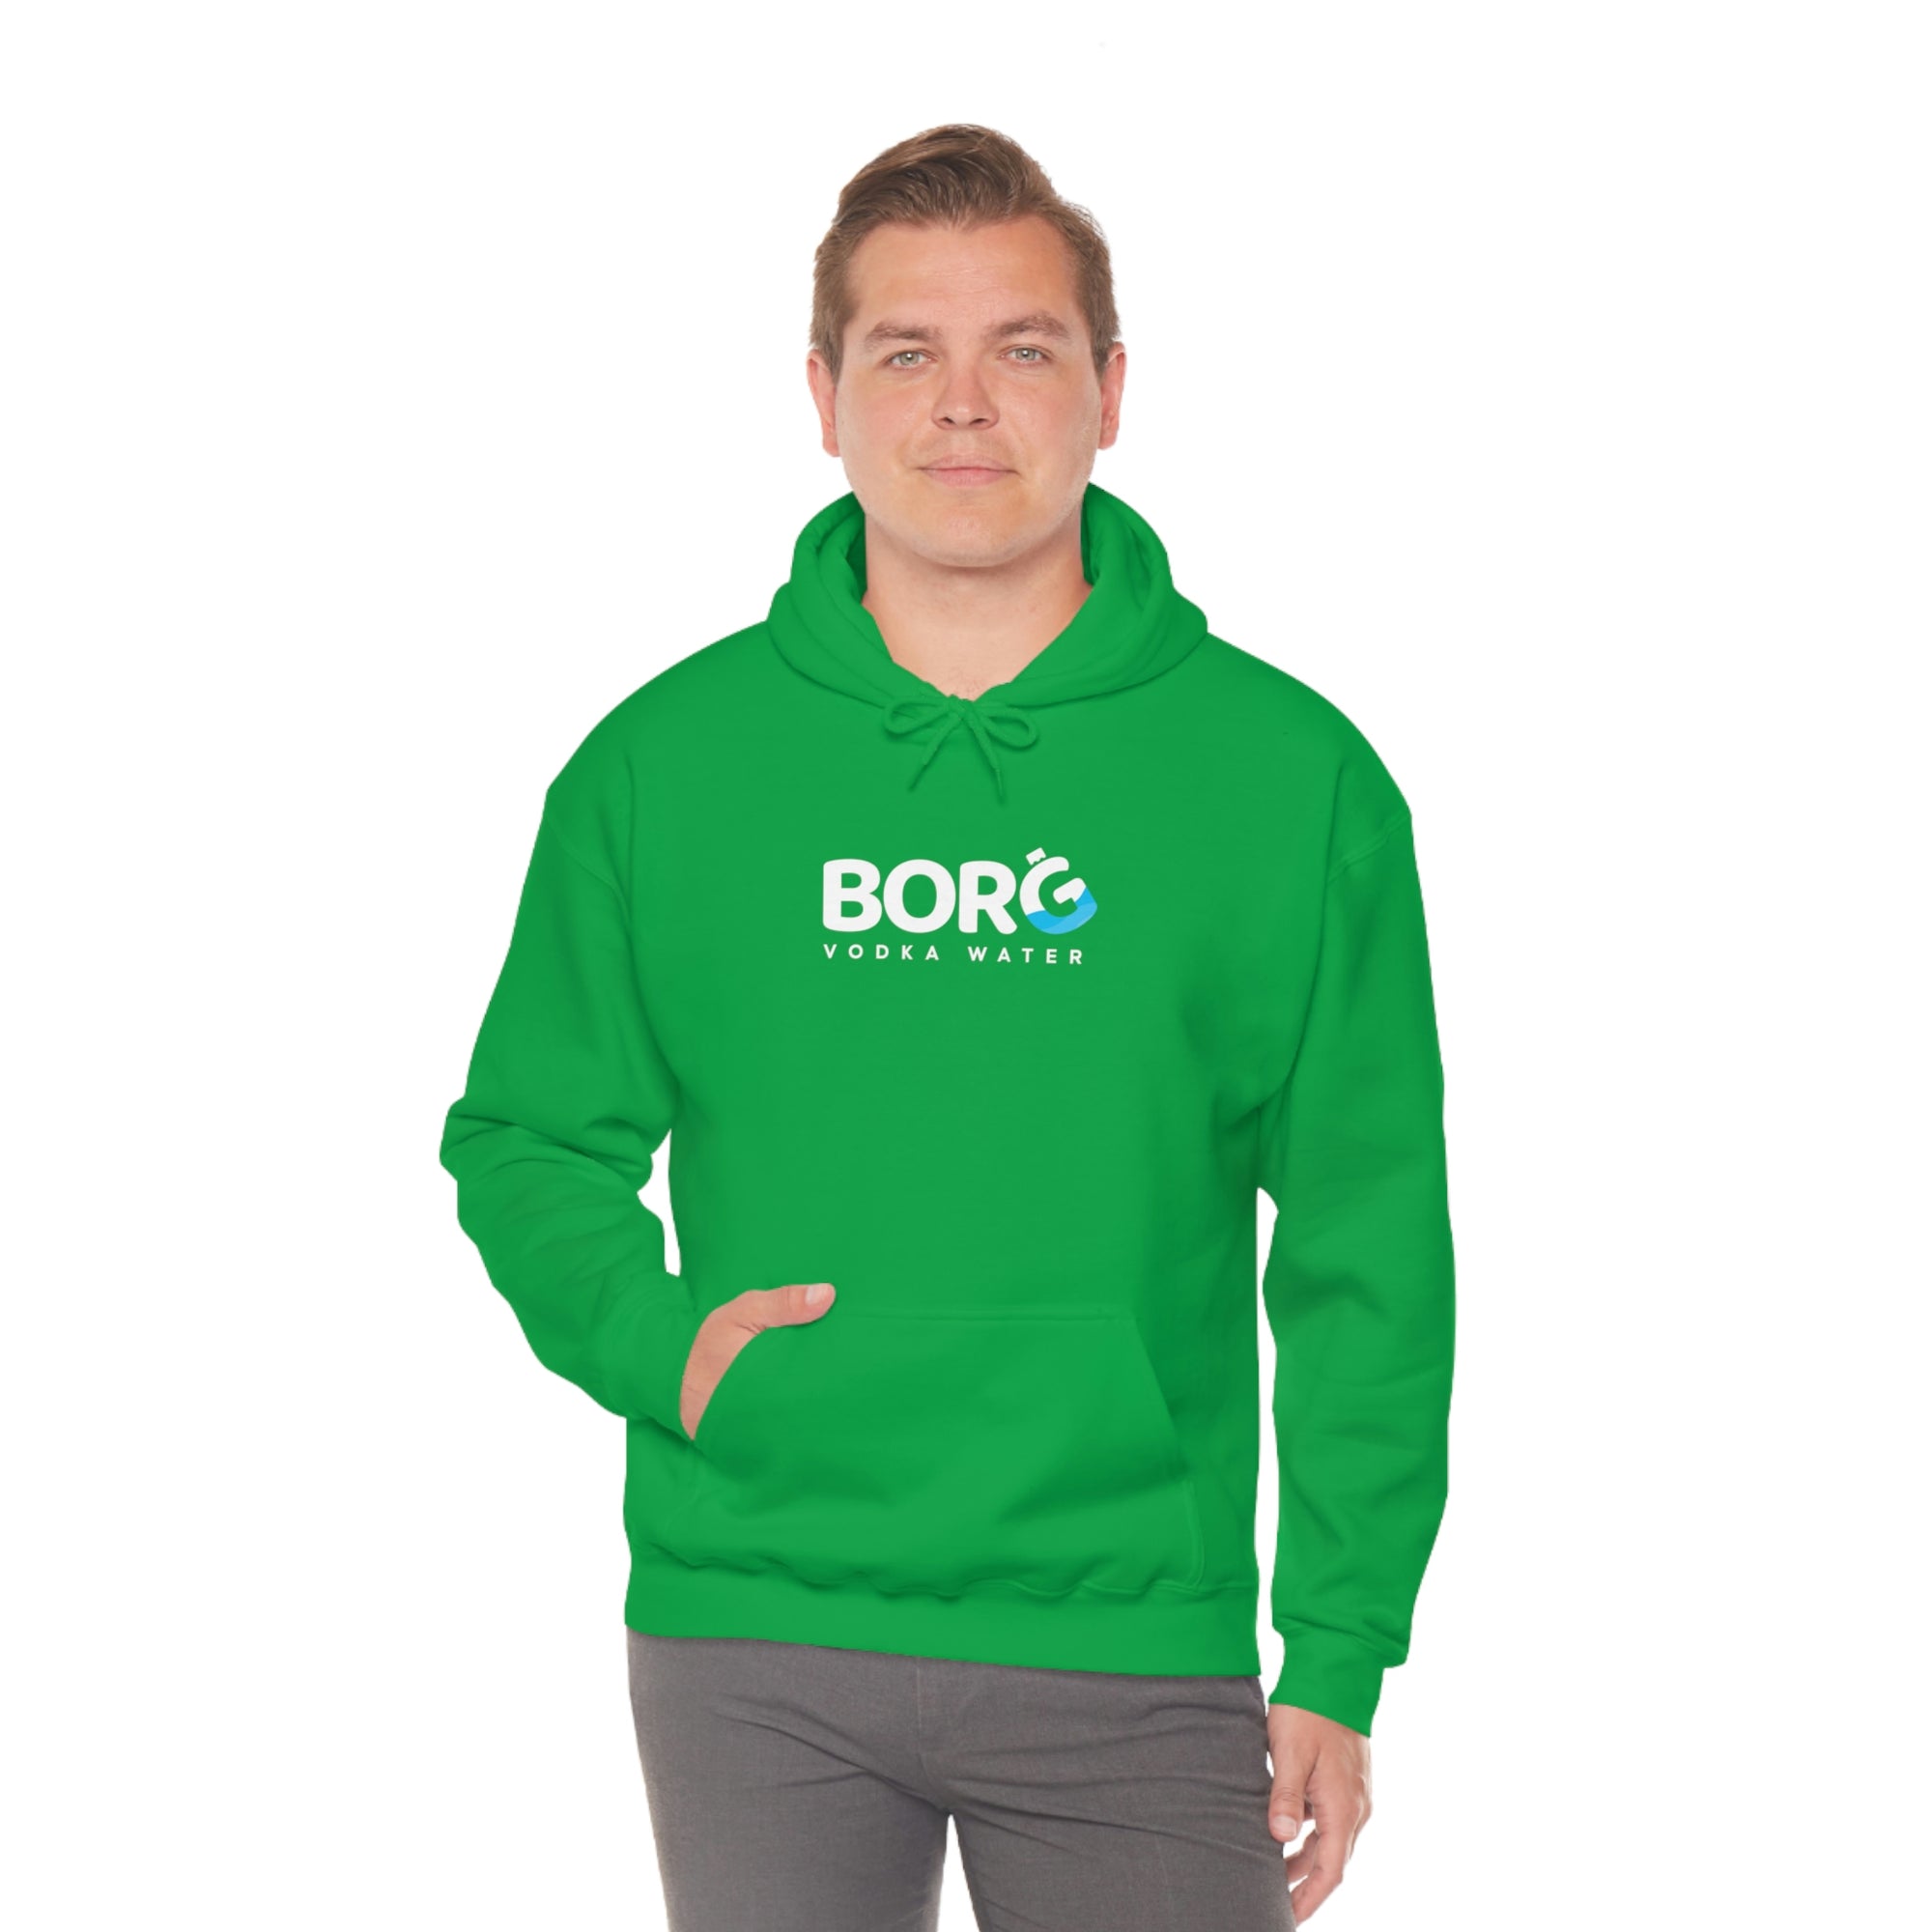 Boy model wearing the green Borg hooded sweatshirt